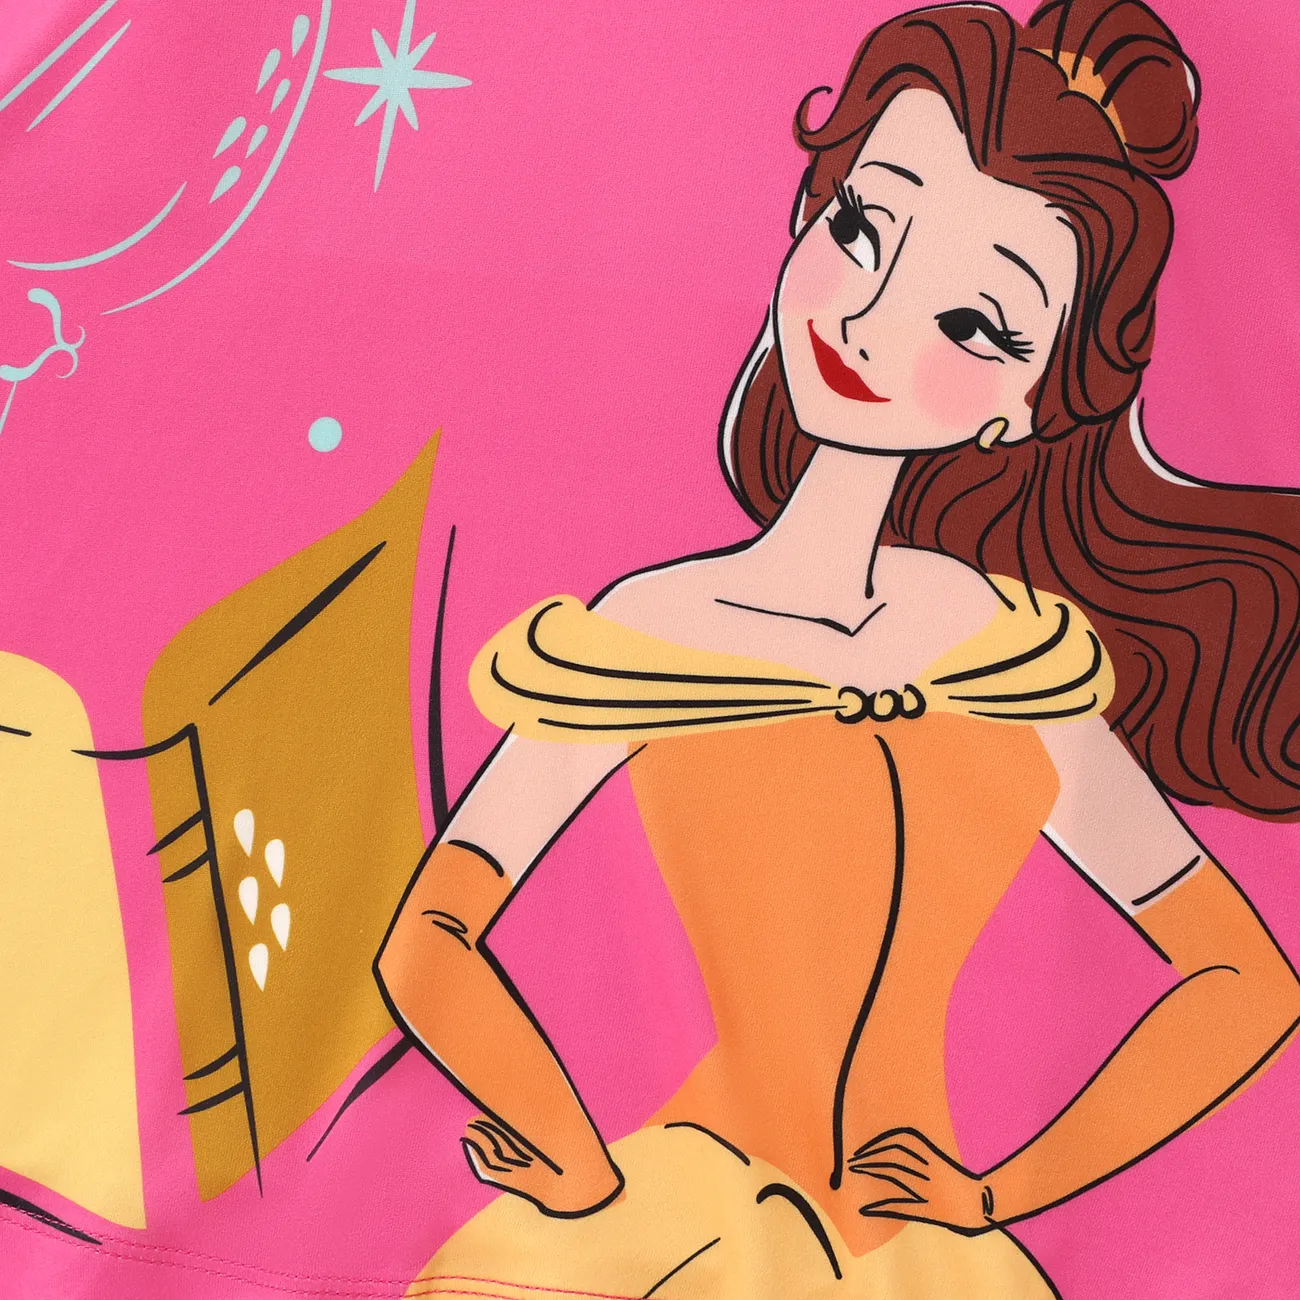 Disney Princess 小童 女 喇叭袖 甜美 連衣裙 粉色 big image 1